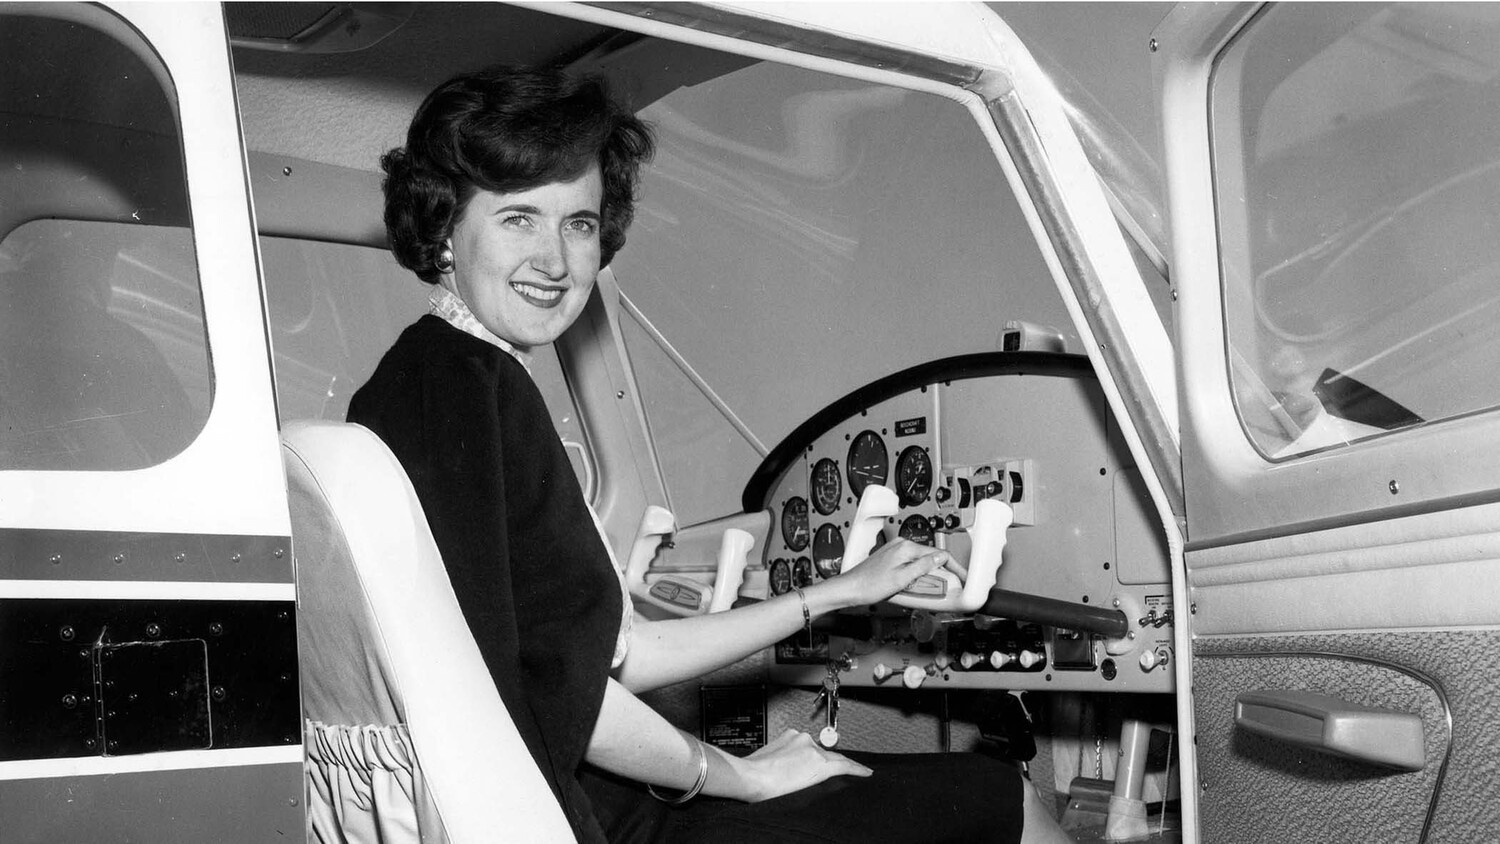 Gene Nora Jessen broke flying boundaries for women at OU, NASA and beyond